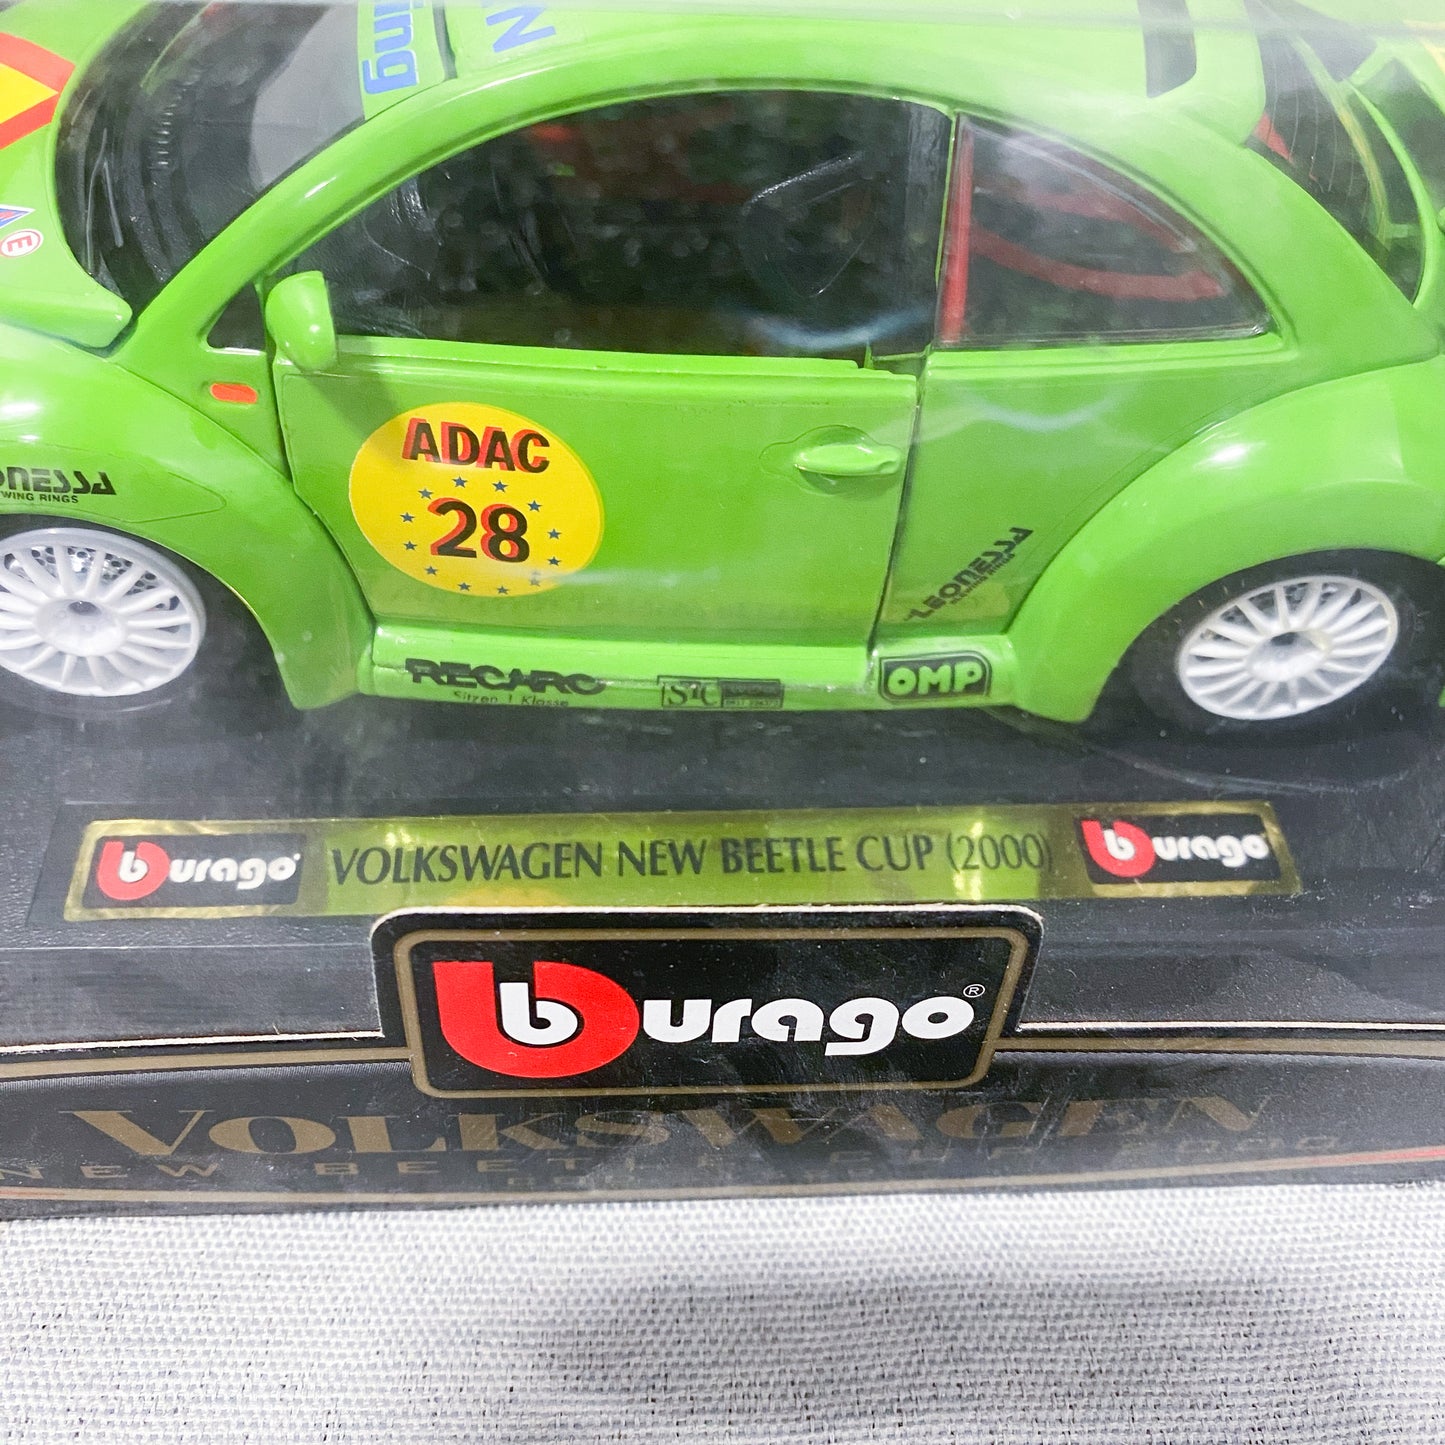 Collectable Model Car (Green)